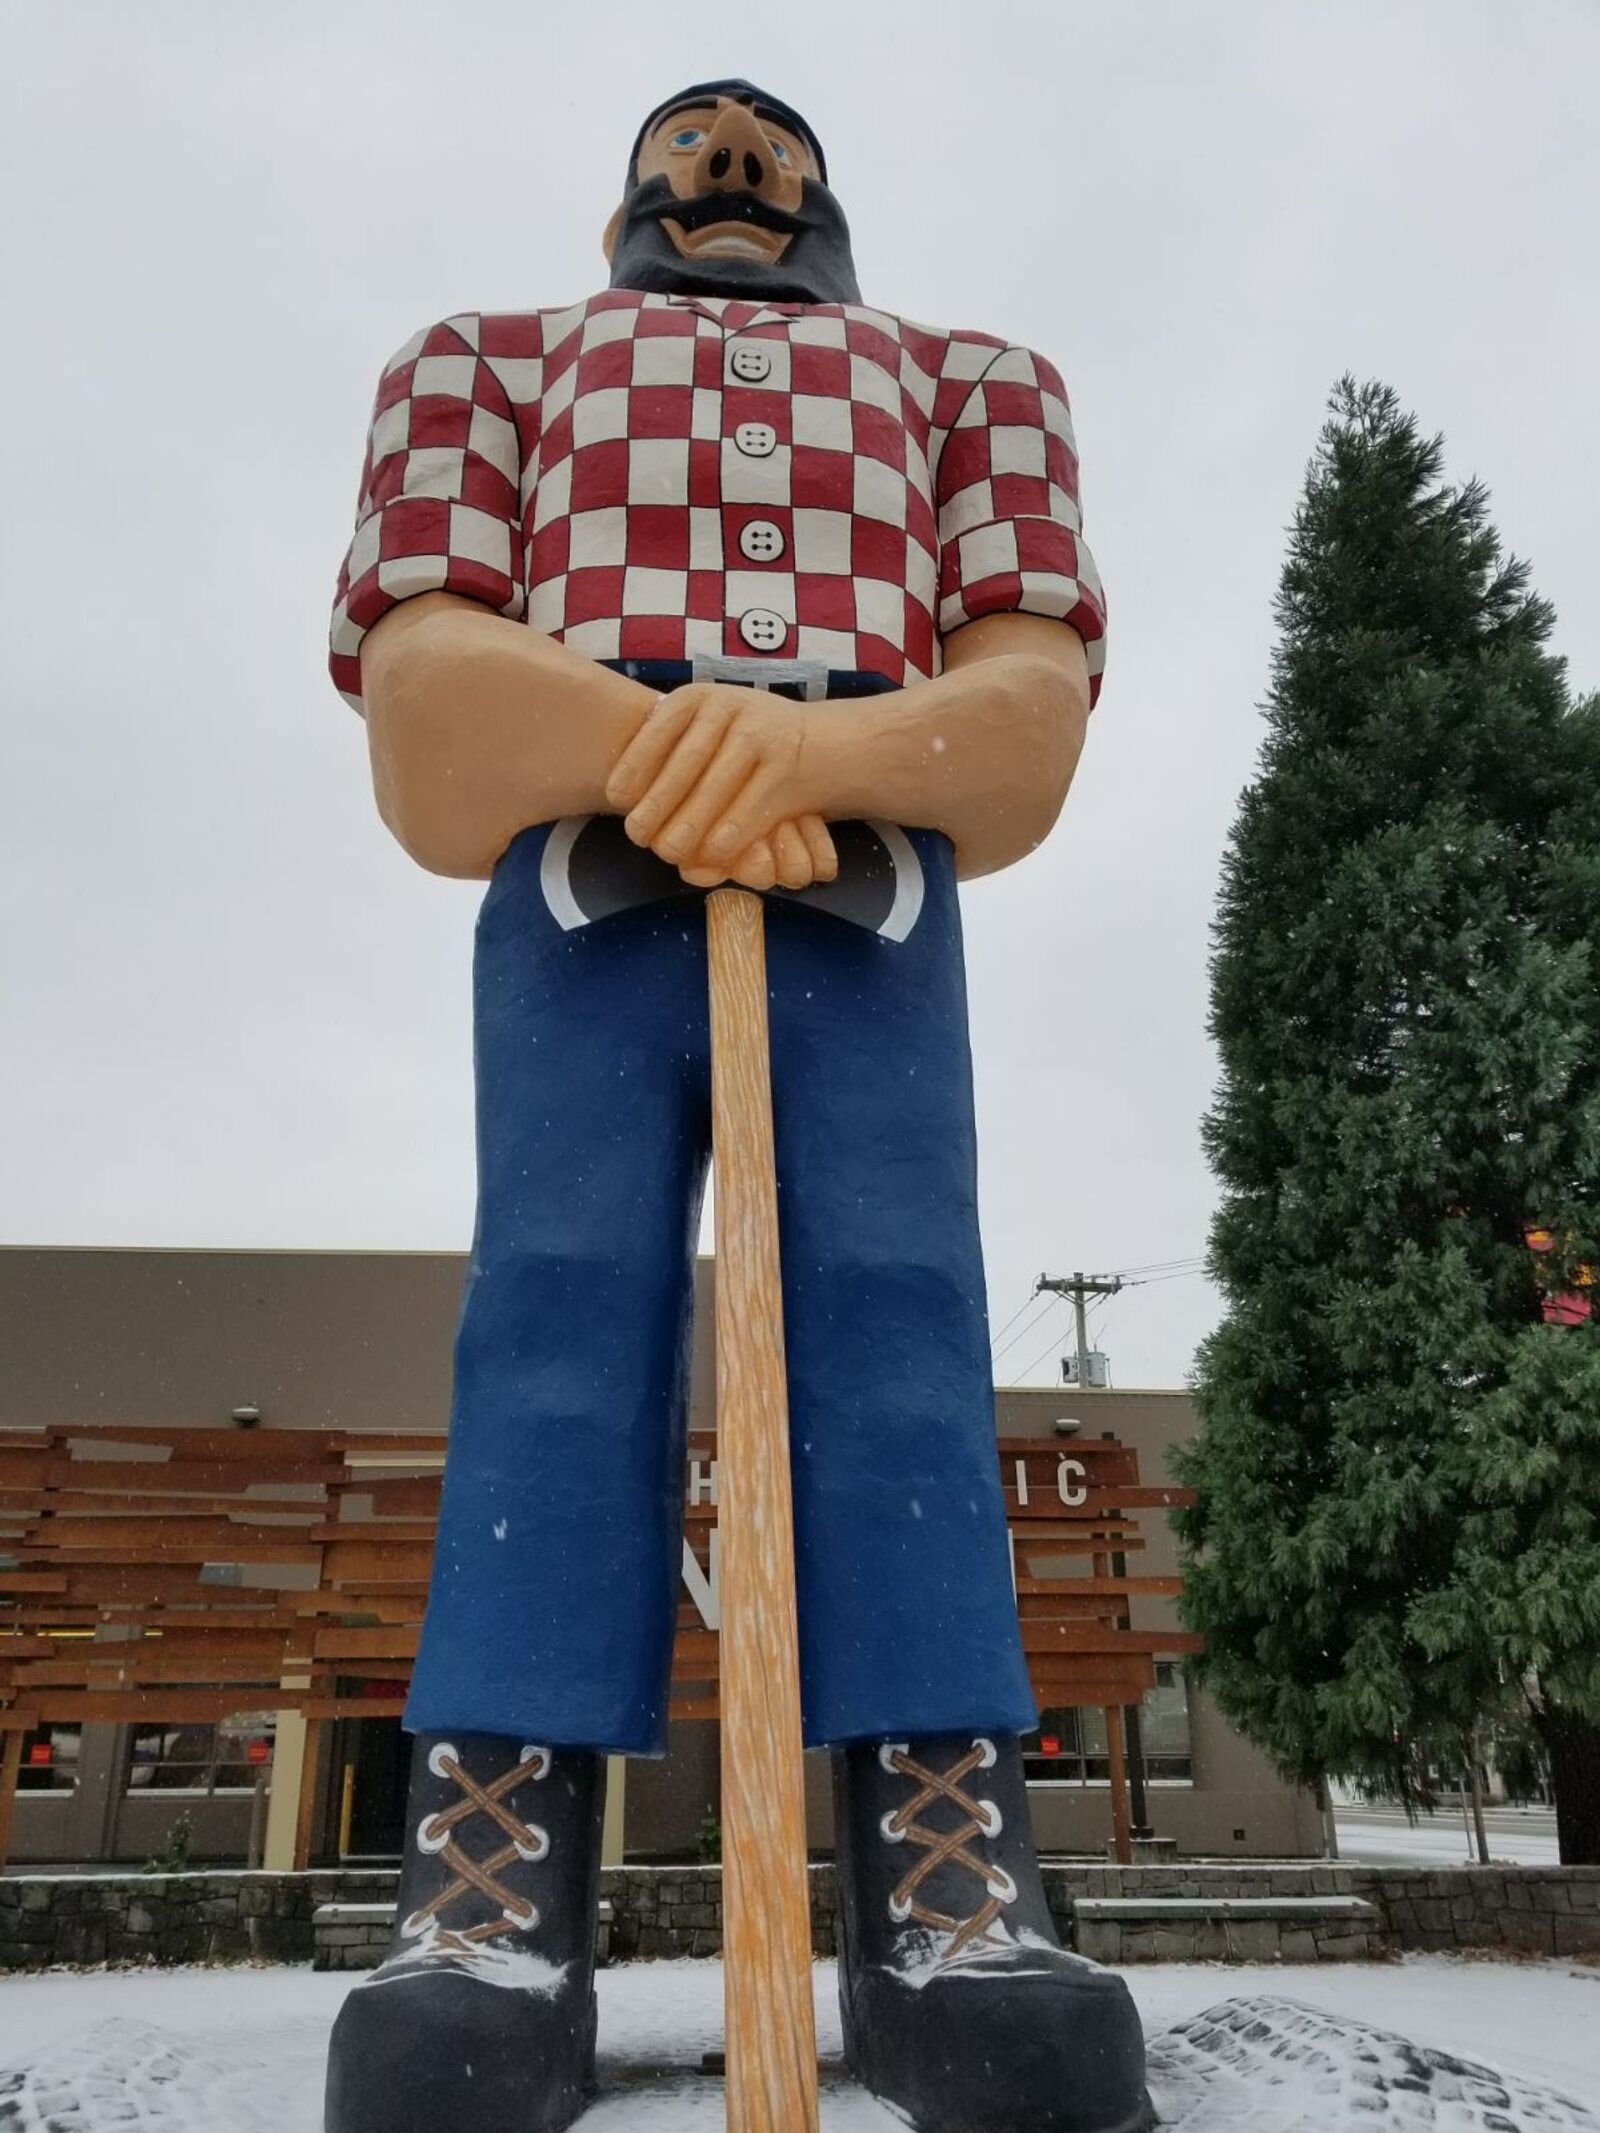 A large stature of the lumberjack Paul Bunyan